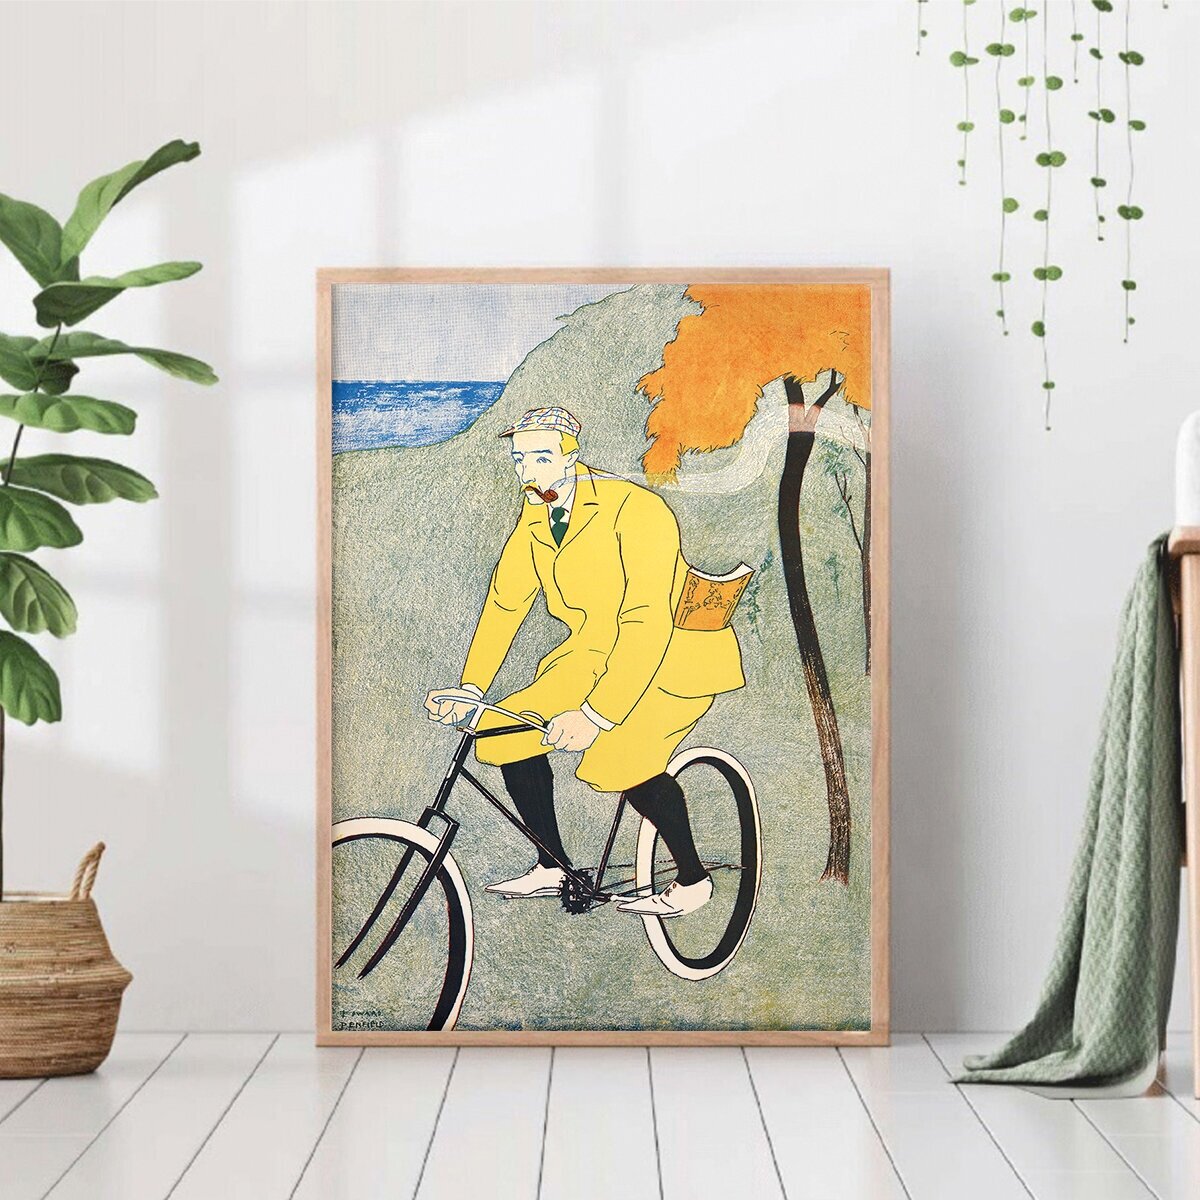 Постер без рамки "Мужчина на велосипеде" 30 на 40 в тубусе / Картина для интерьера / Плакат / Постер на стену / Интерьерные картины